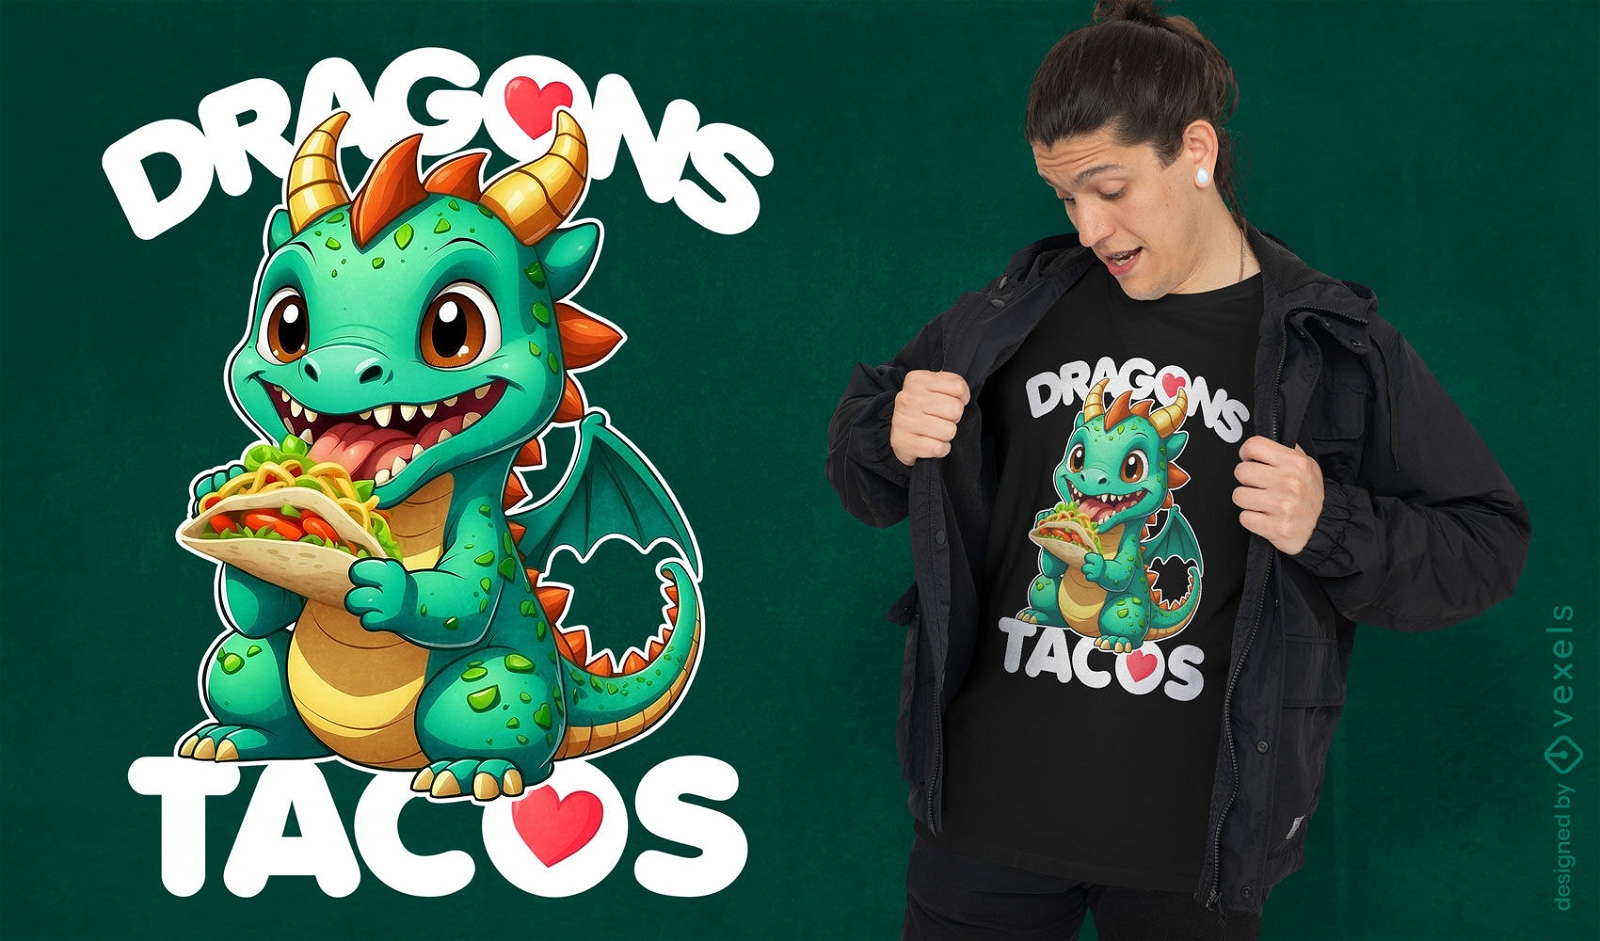 Dragon eating tacos t-shirt design